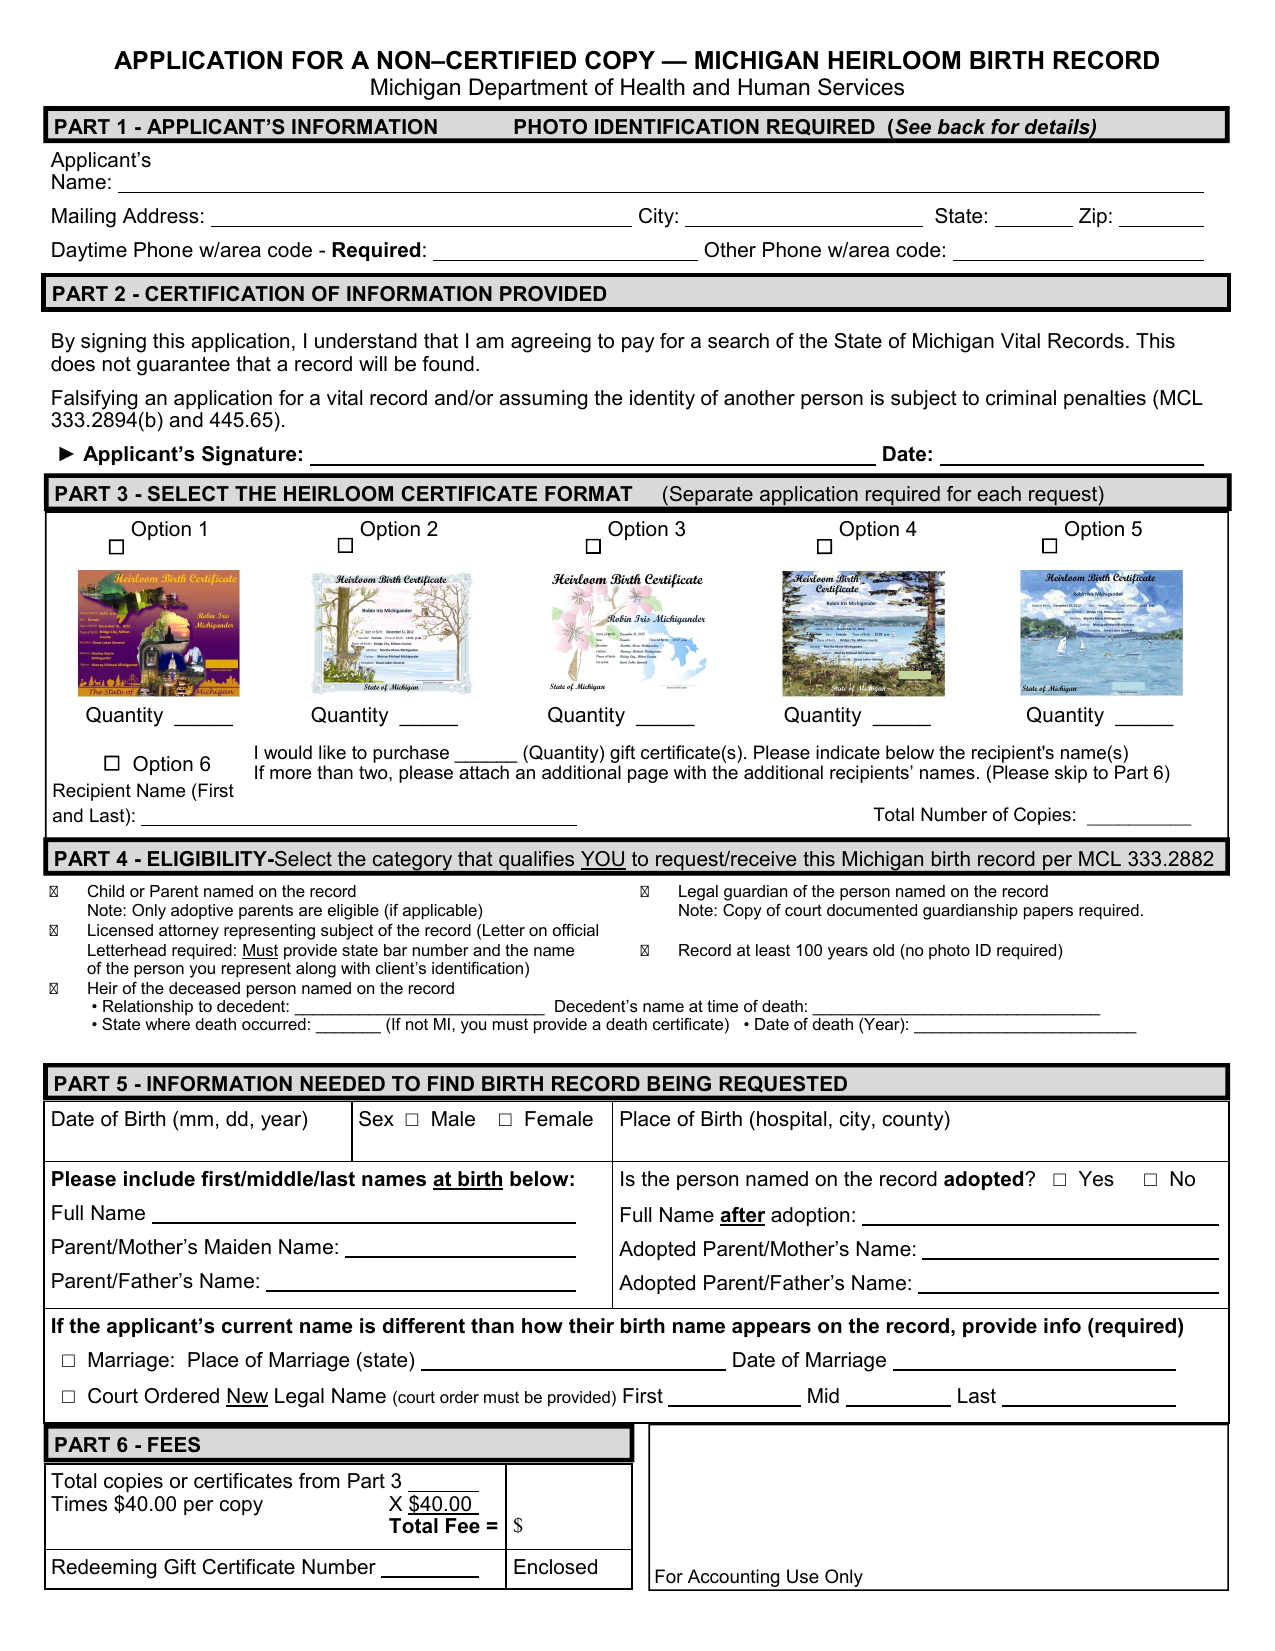 Form DCH-0569-BX-HEIR Heirloom Birth Certificate Application - Michigan, Page 1